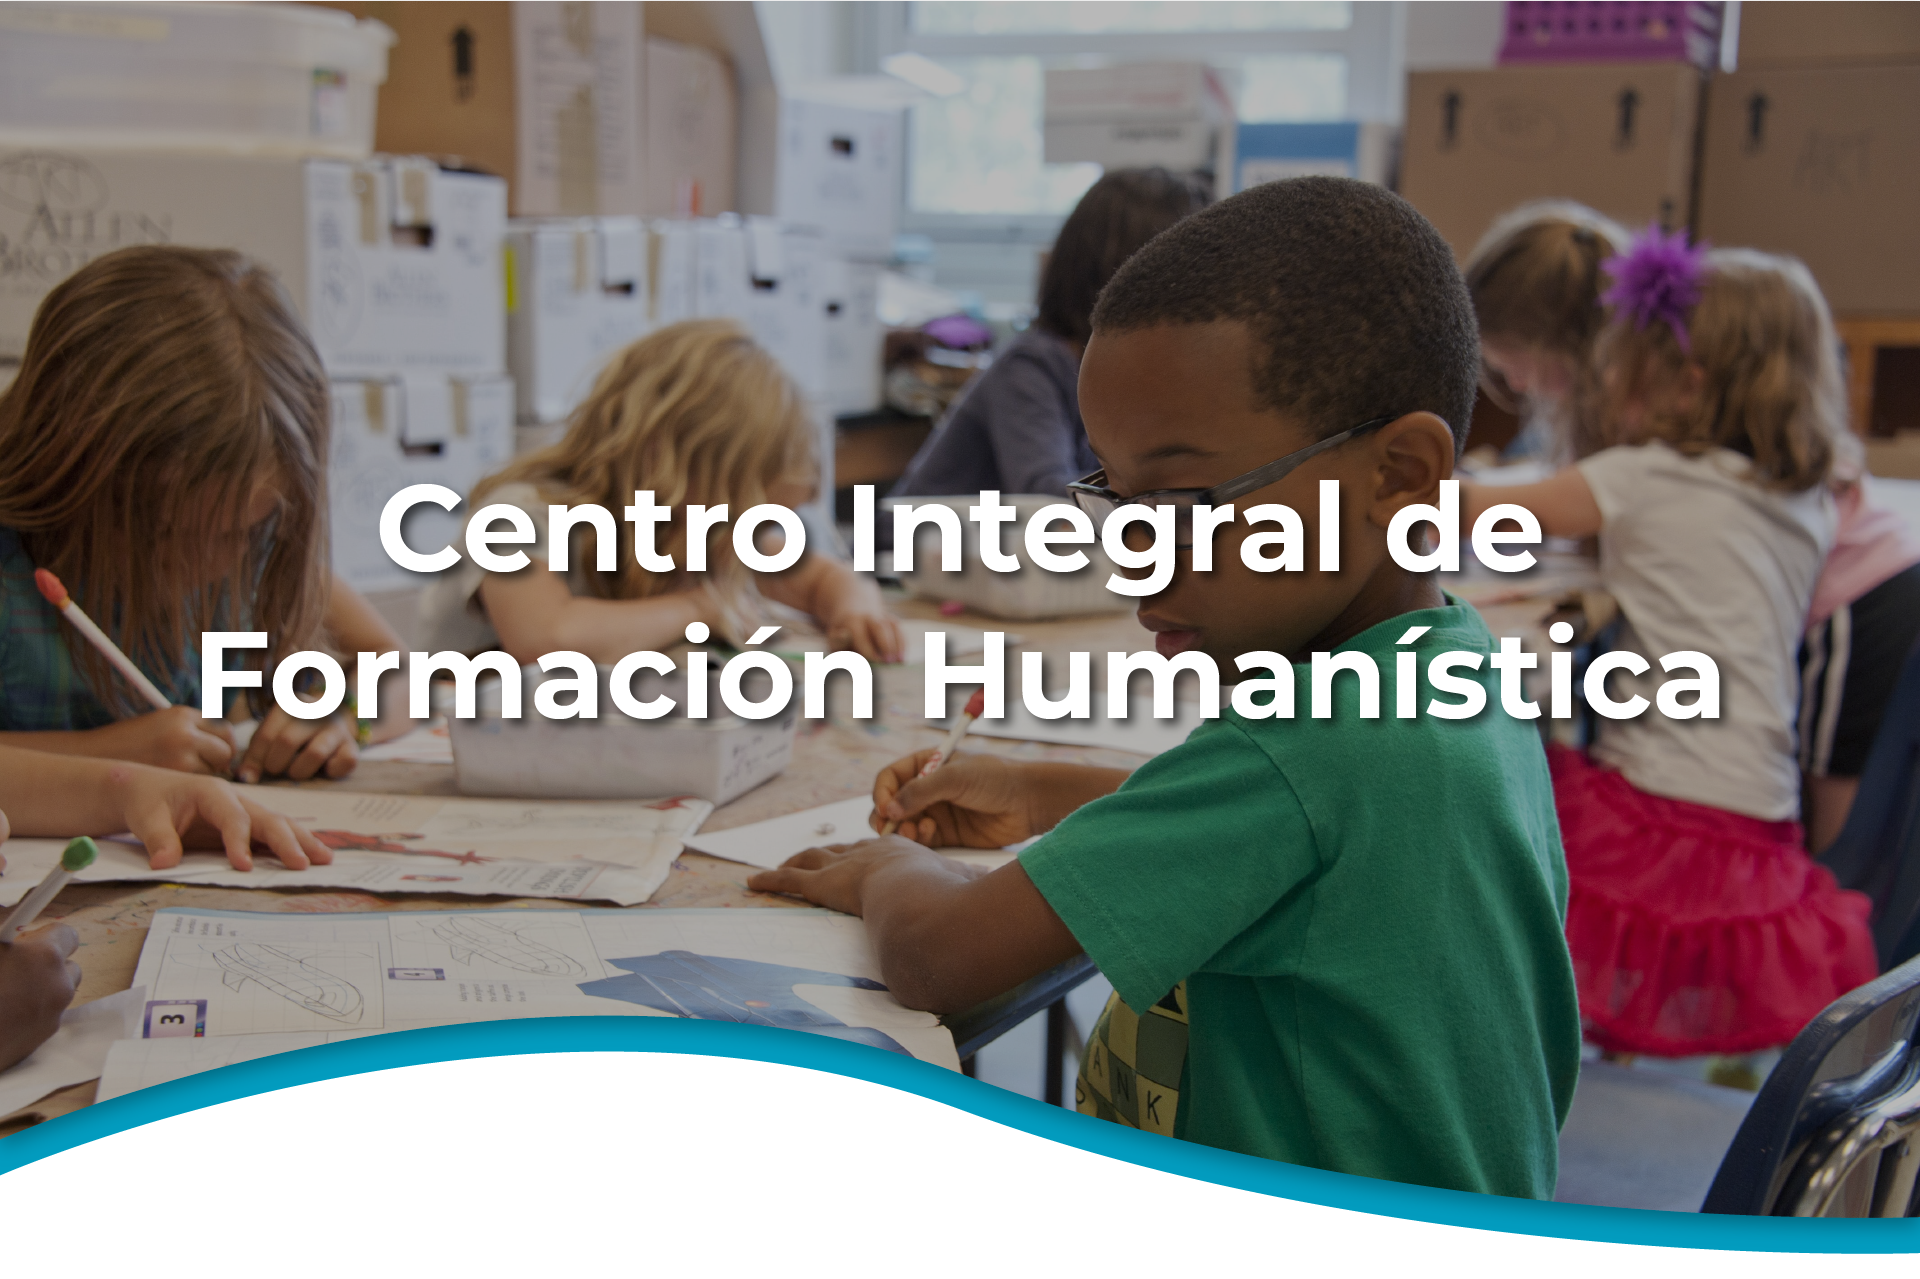 Centro Integral de Formación Humanística